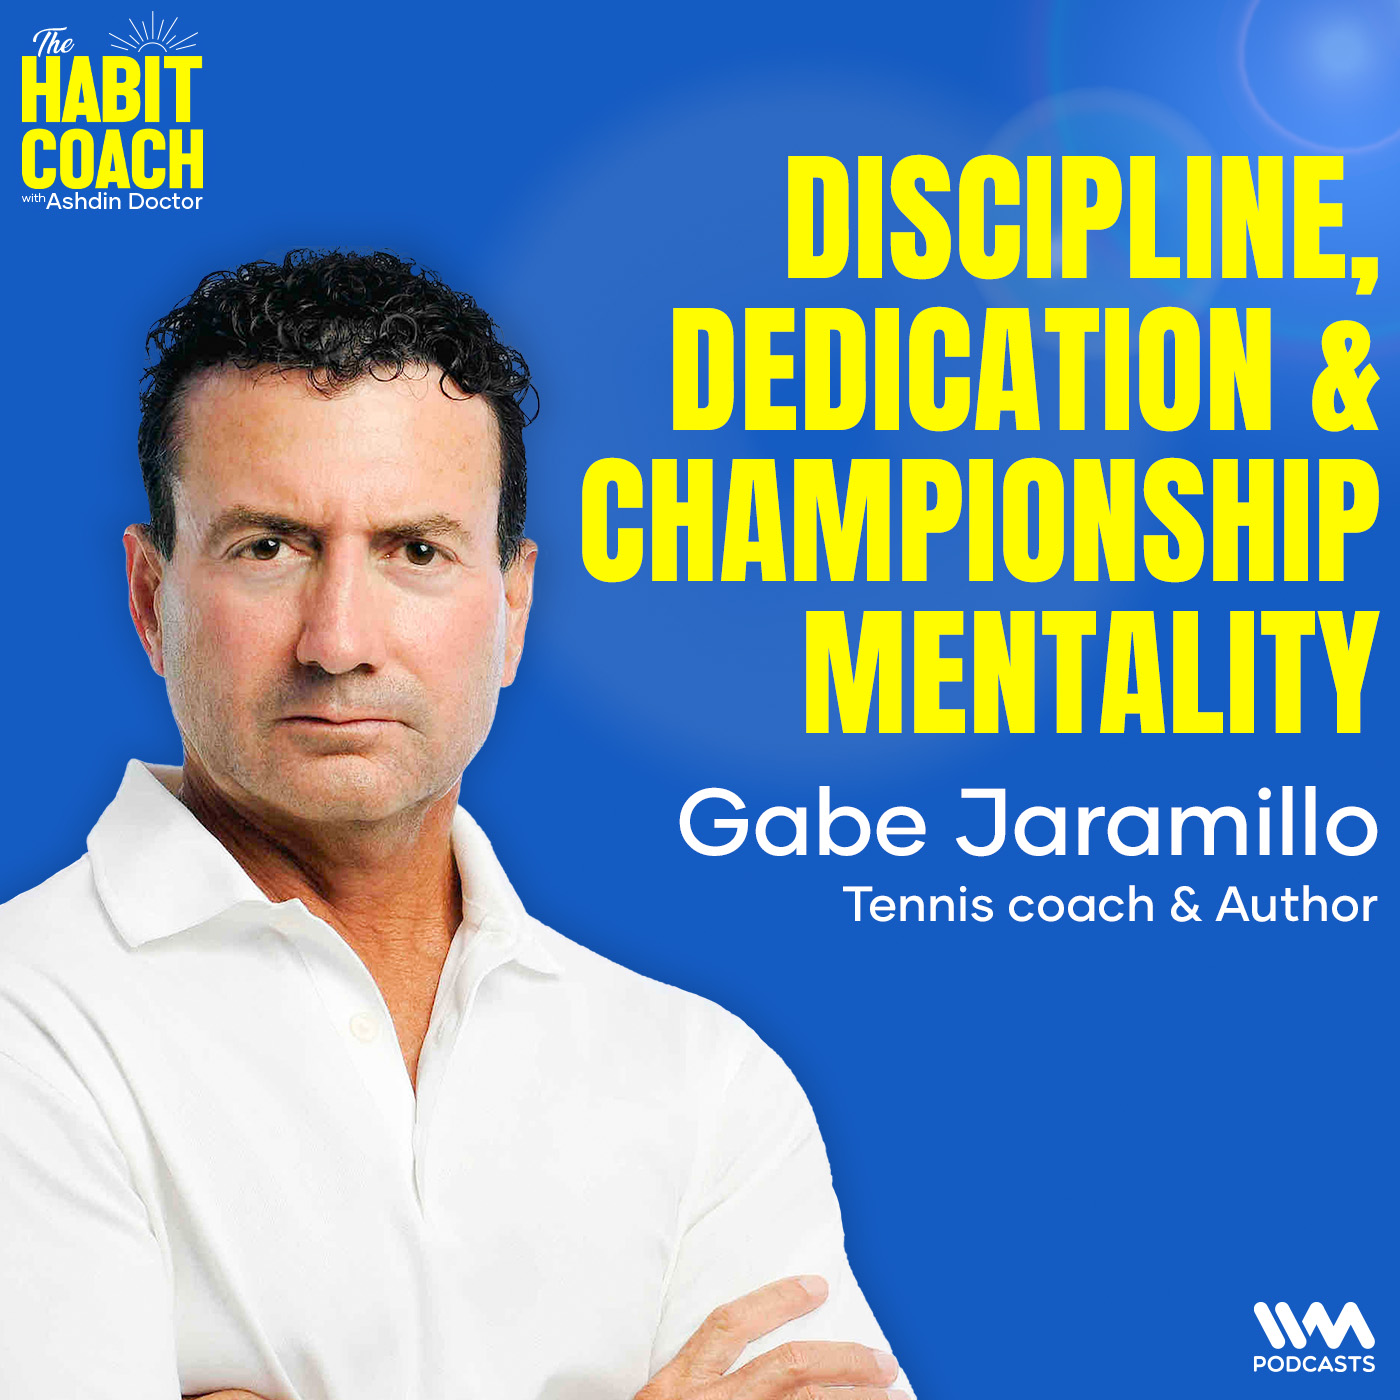 Gabe Jaramillo: Discipline, Dedication & Championship Mentality